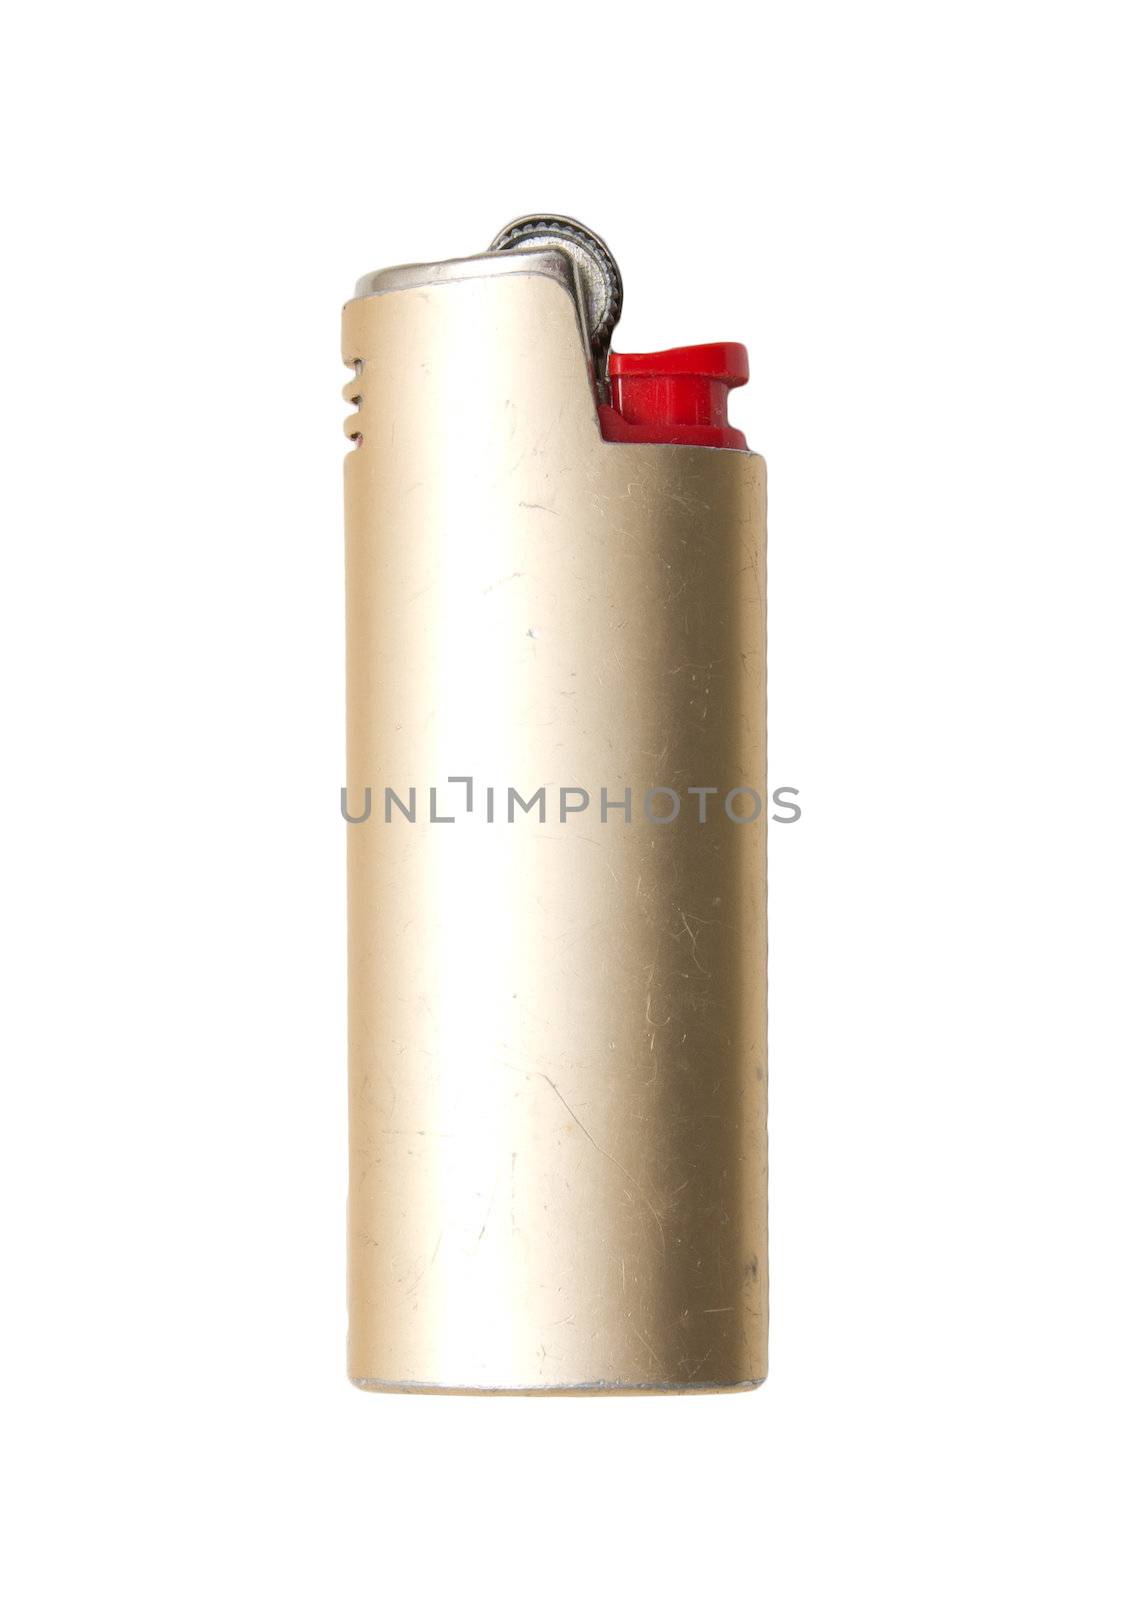 Lighter on a white background by schankz